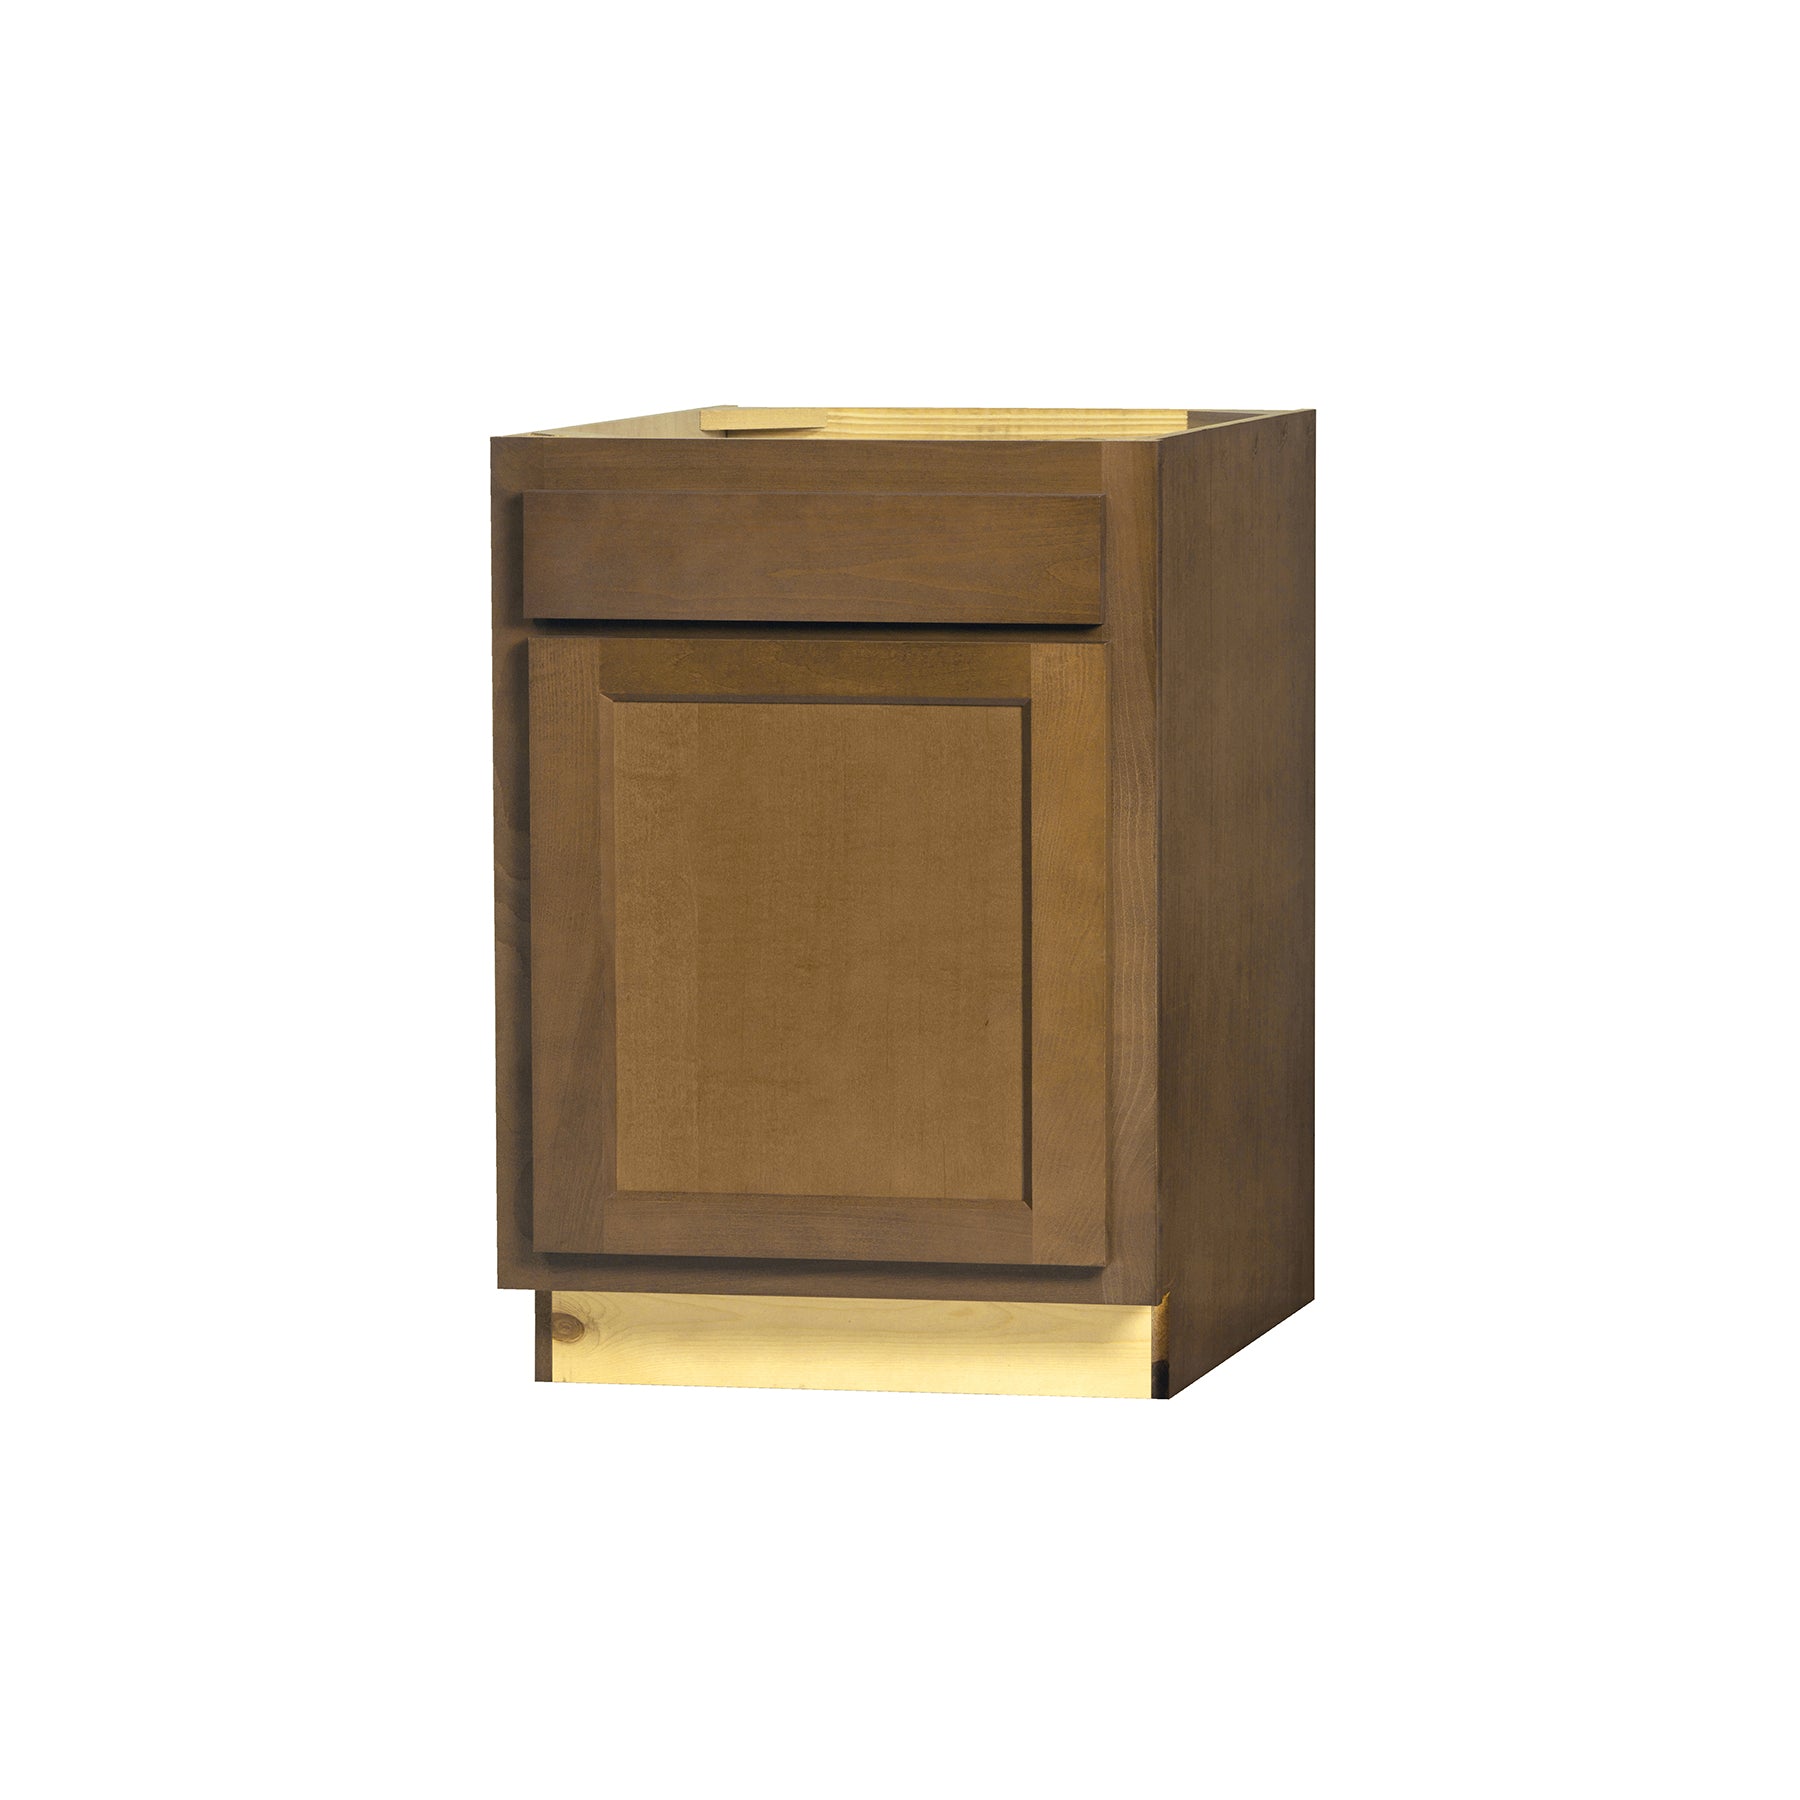 24 Inch Base Cabinets - Warmwood Shaker - 24 Inch W x 24 Inch D x 34.5 Inch H